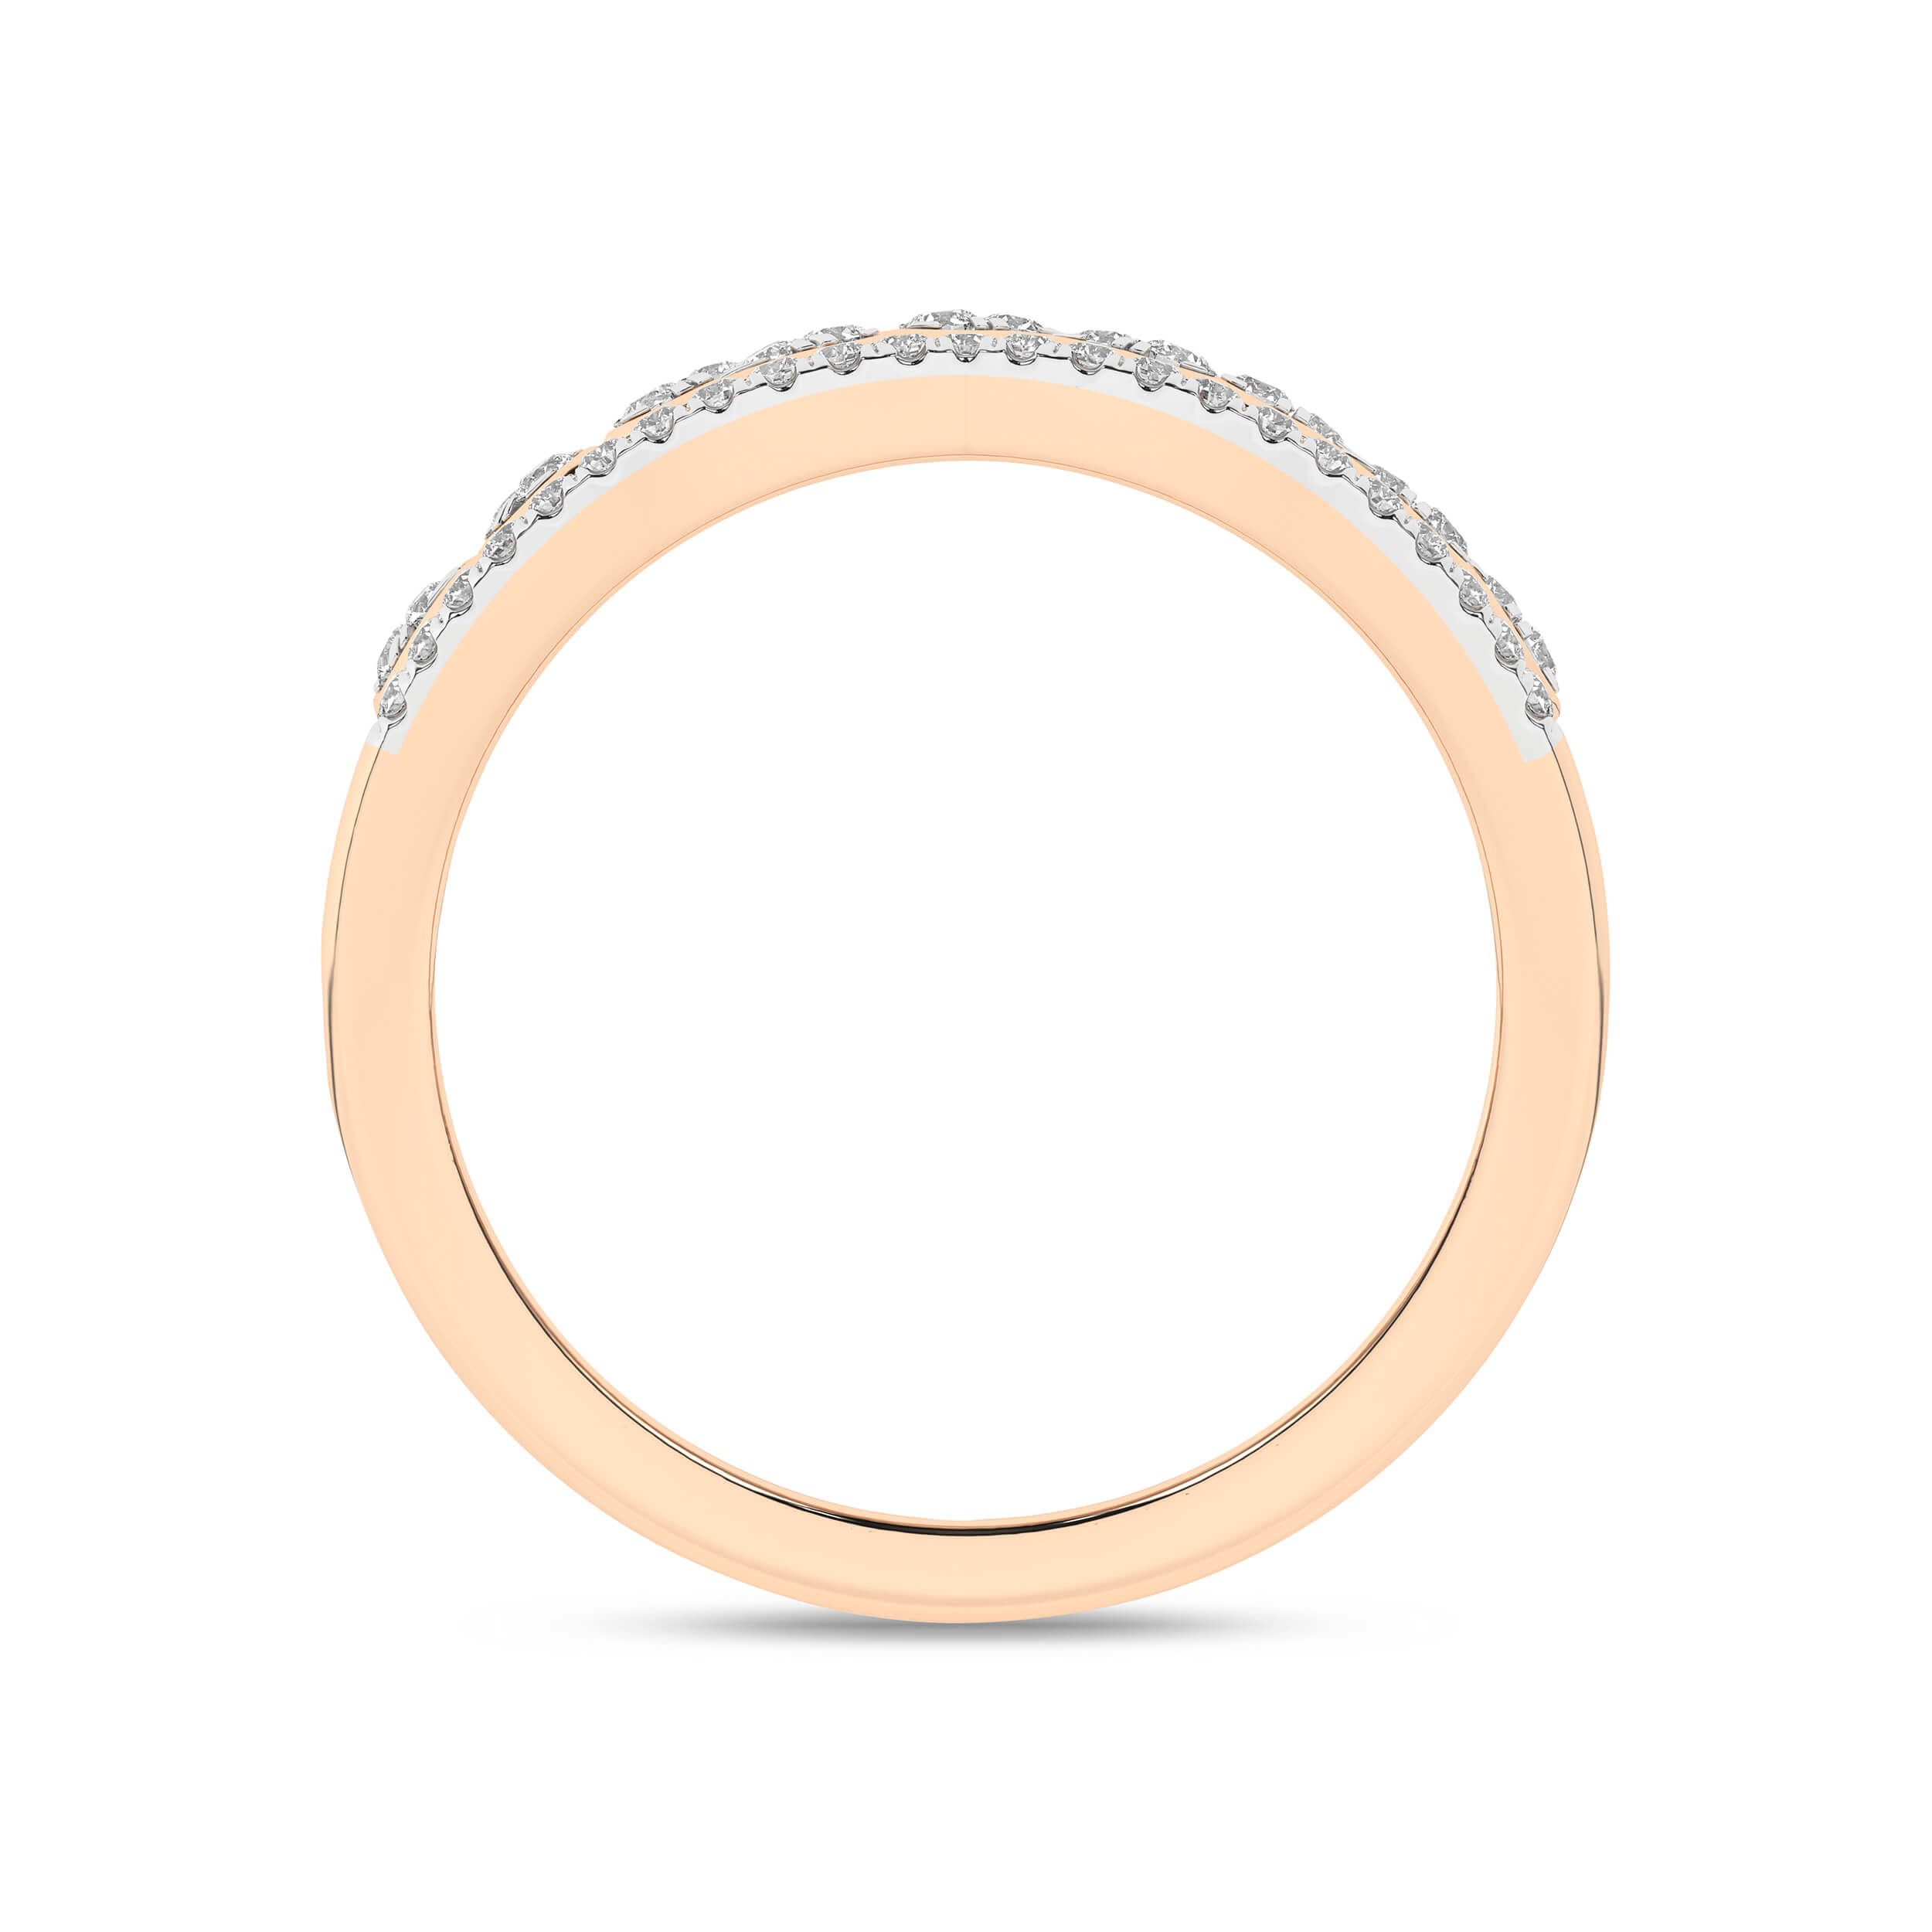 Inel din Aur Roz 14K cu Diamante 0.15Ct, articol RF14900, previzualizare foto 2